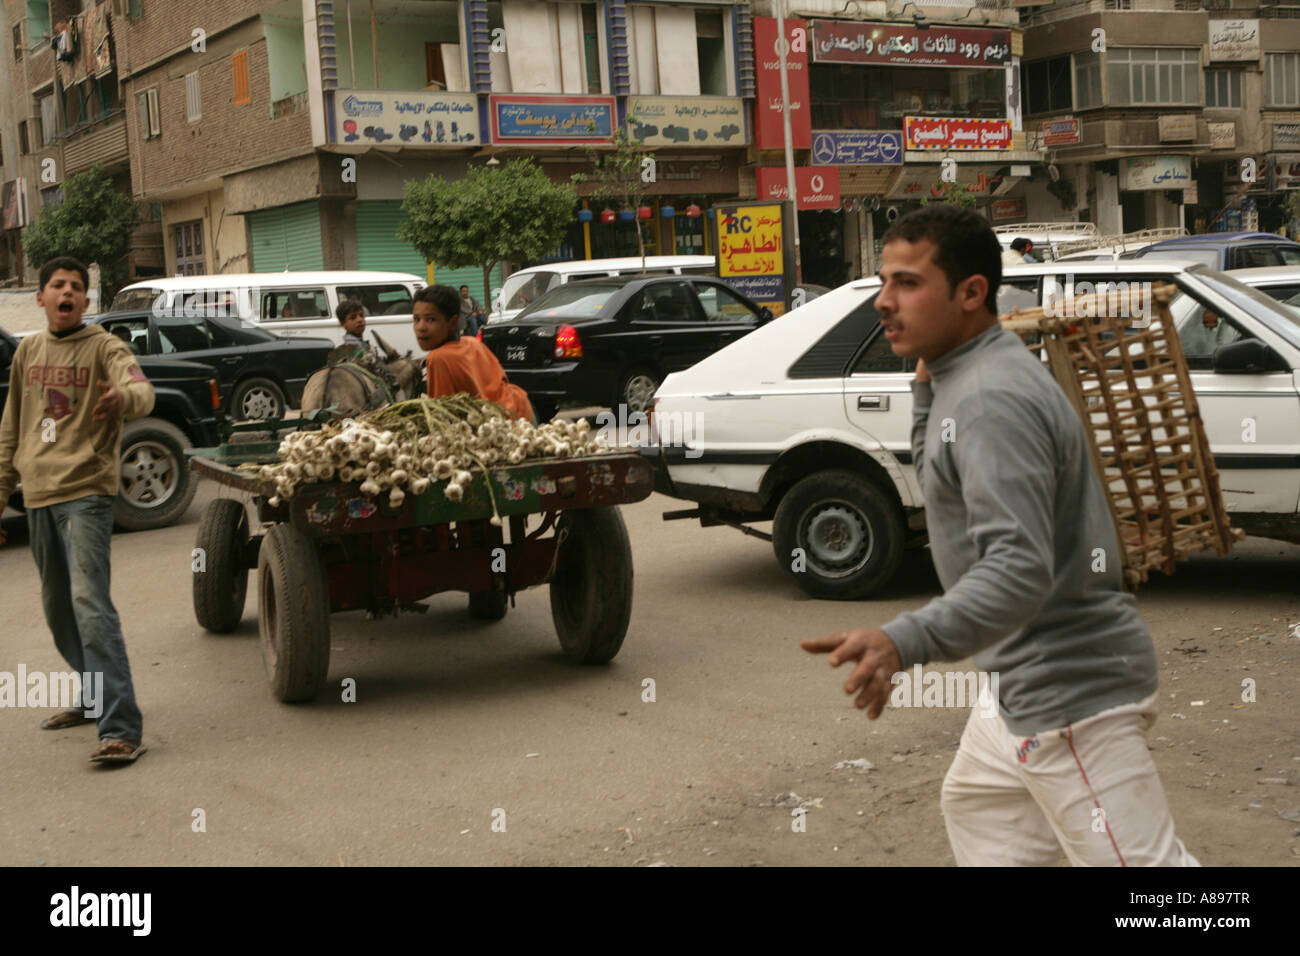 Street vendors in Cairo, Egypt. Stock Photo